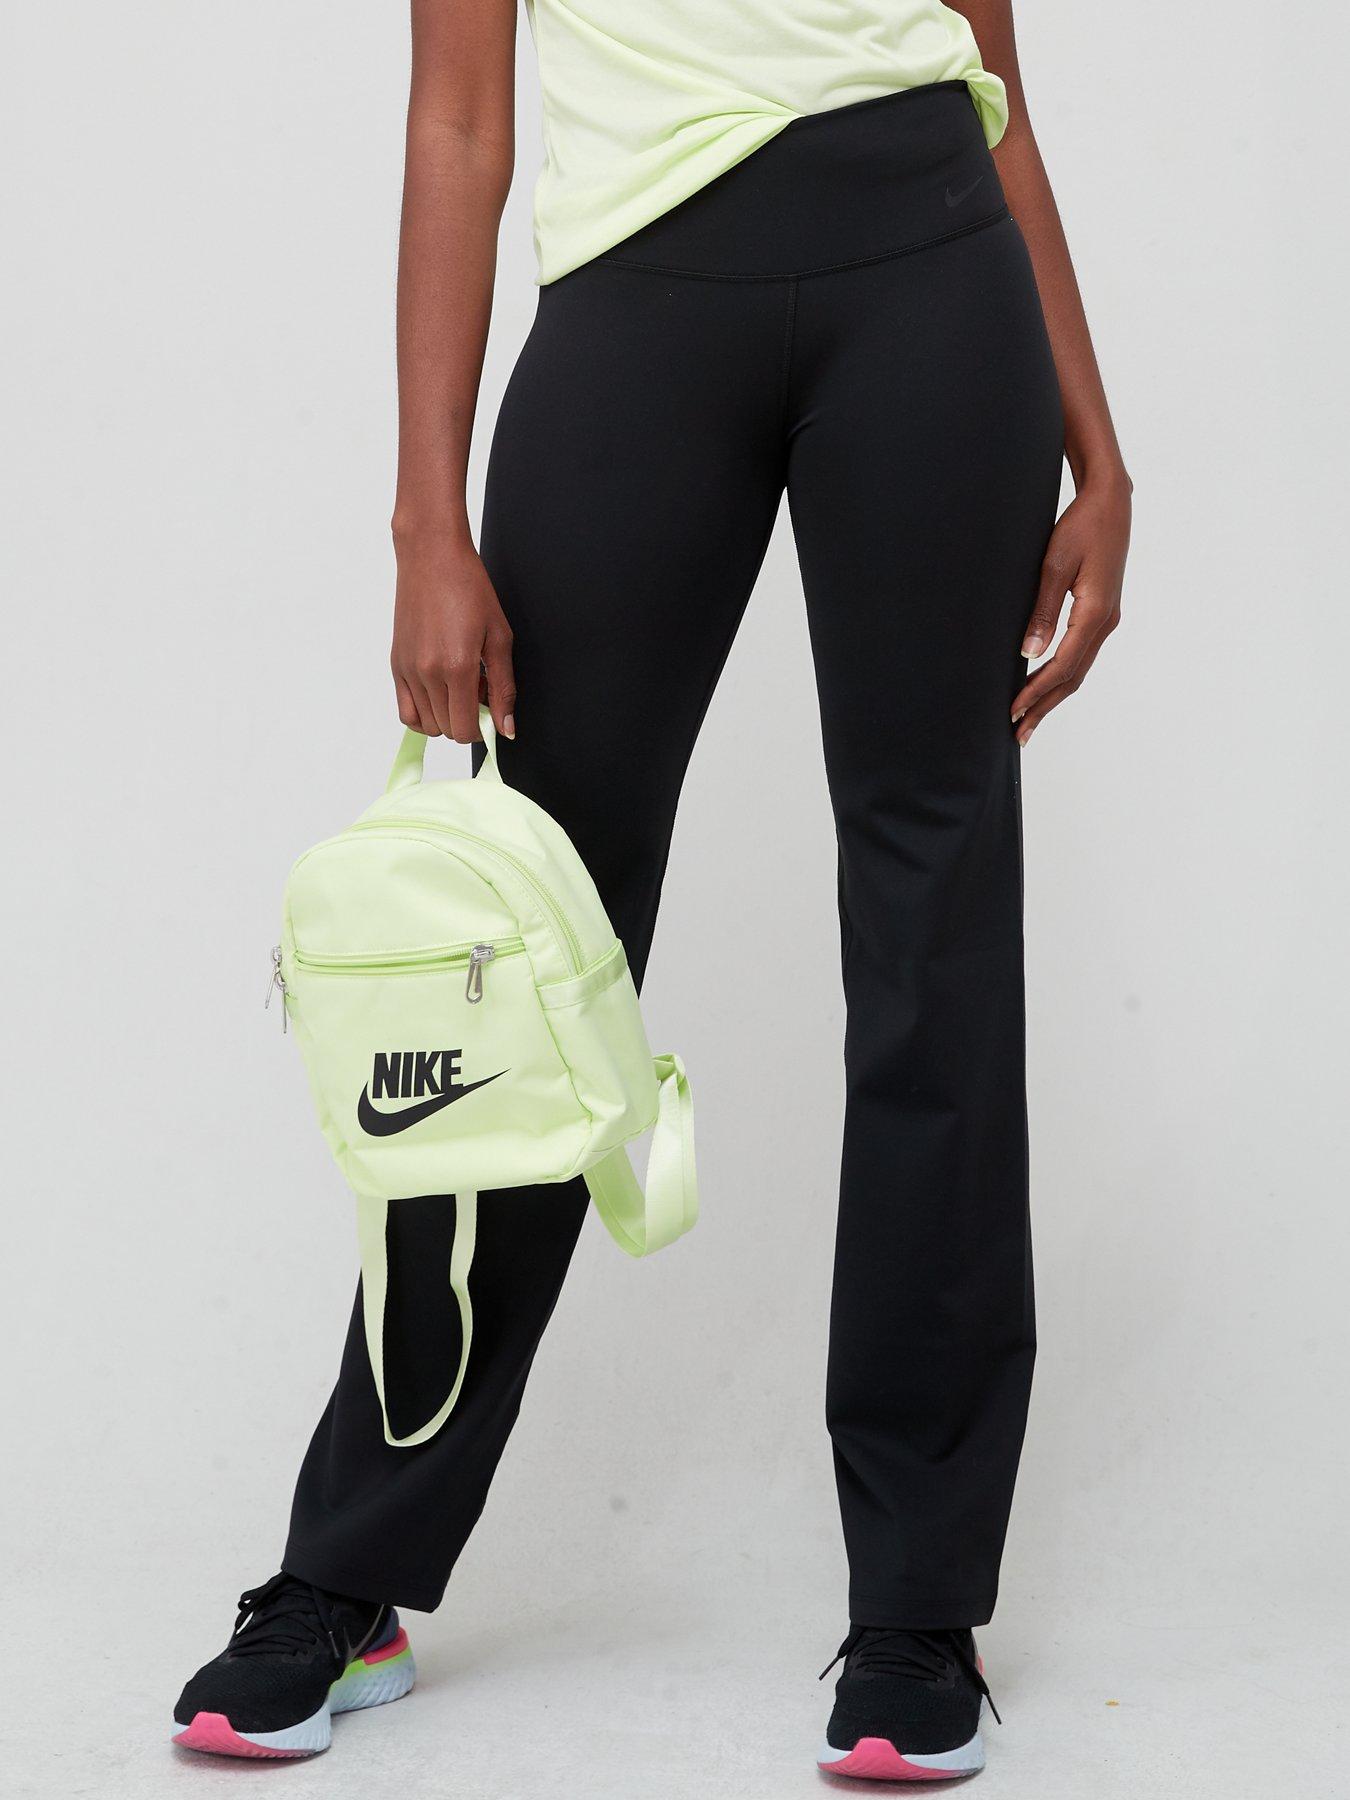 NIKE HERITAGE AIR WOVEN PANT, Black Women's Athletic Pant